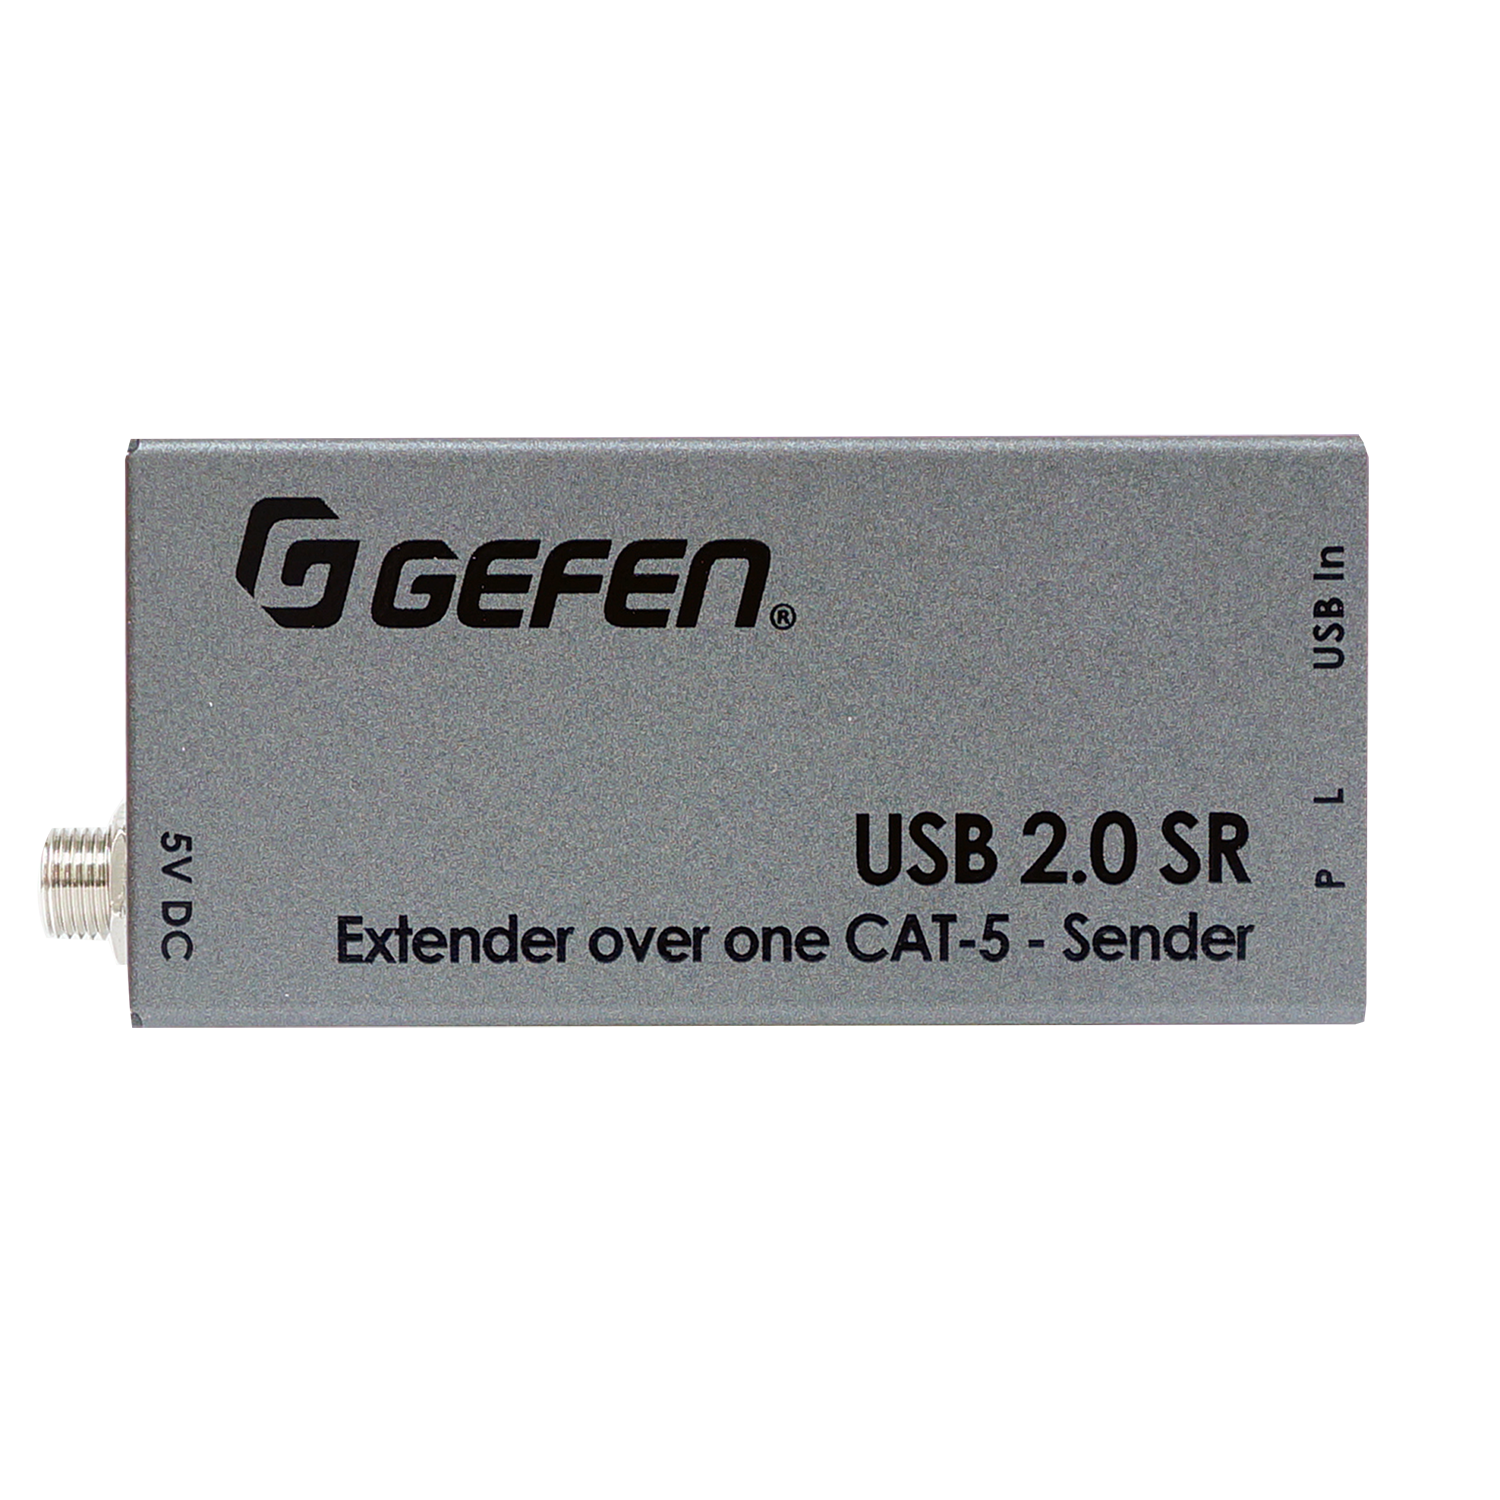 EXT-USB2.0-SR 2.0 SR Extender one CAT-5 Cable